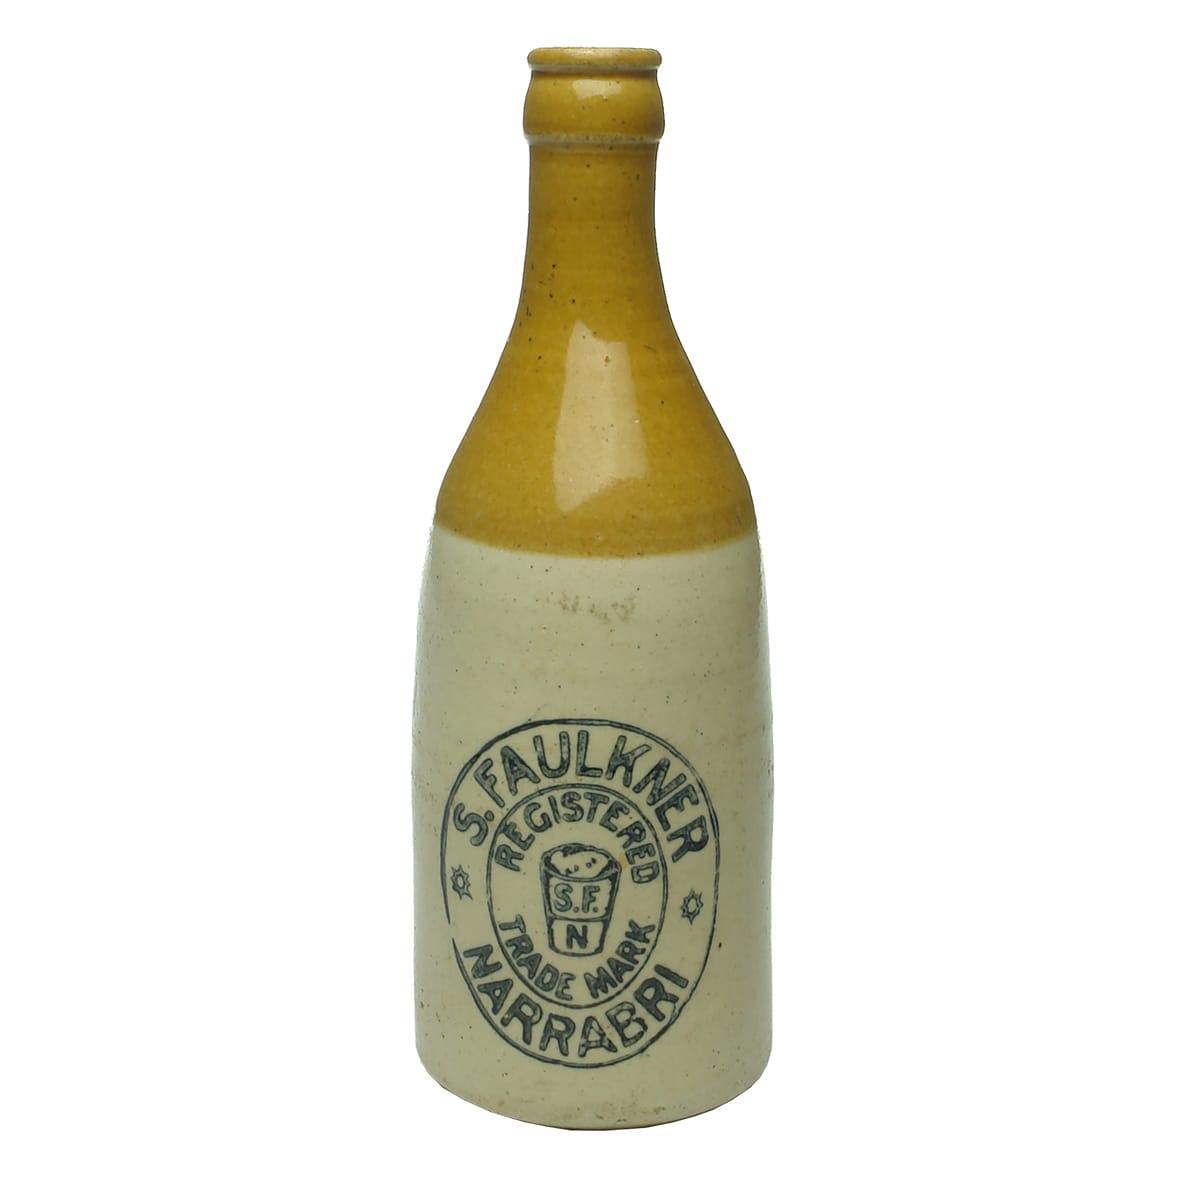 Ginger Beer. S. Faulkner, Narrabri. Crown Seal. Tan Top. Champagne. 10 oz.